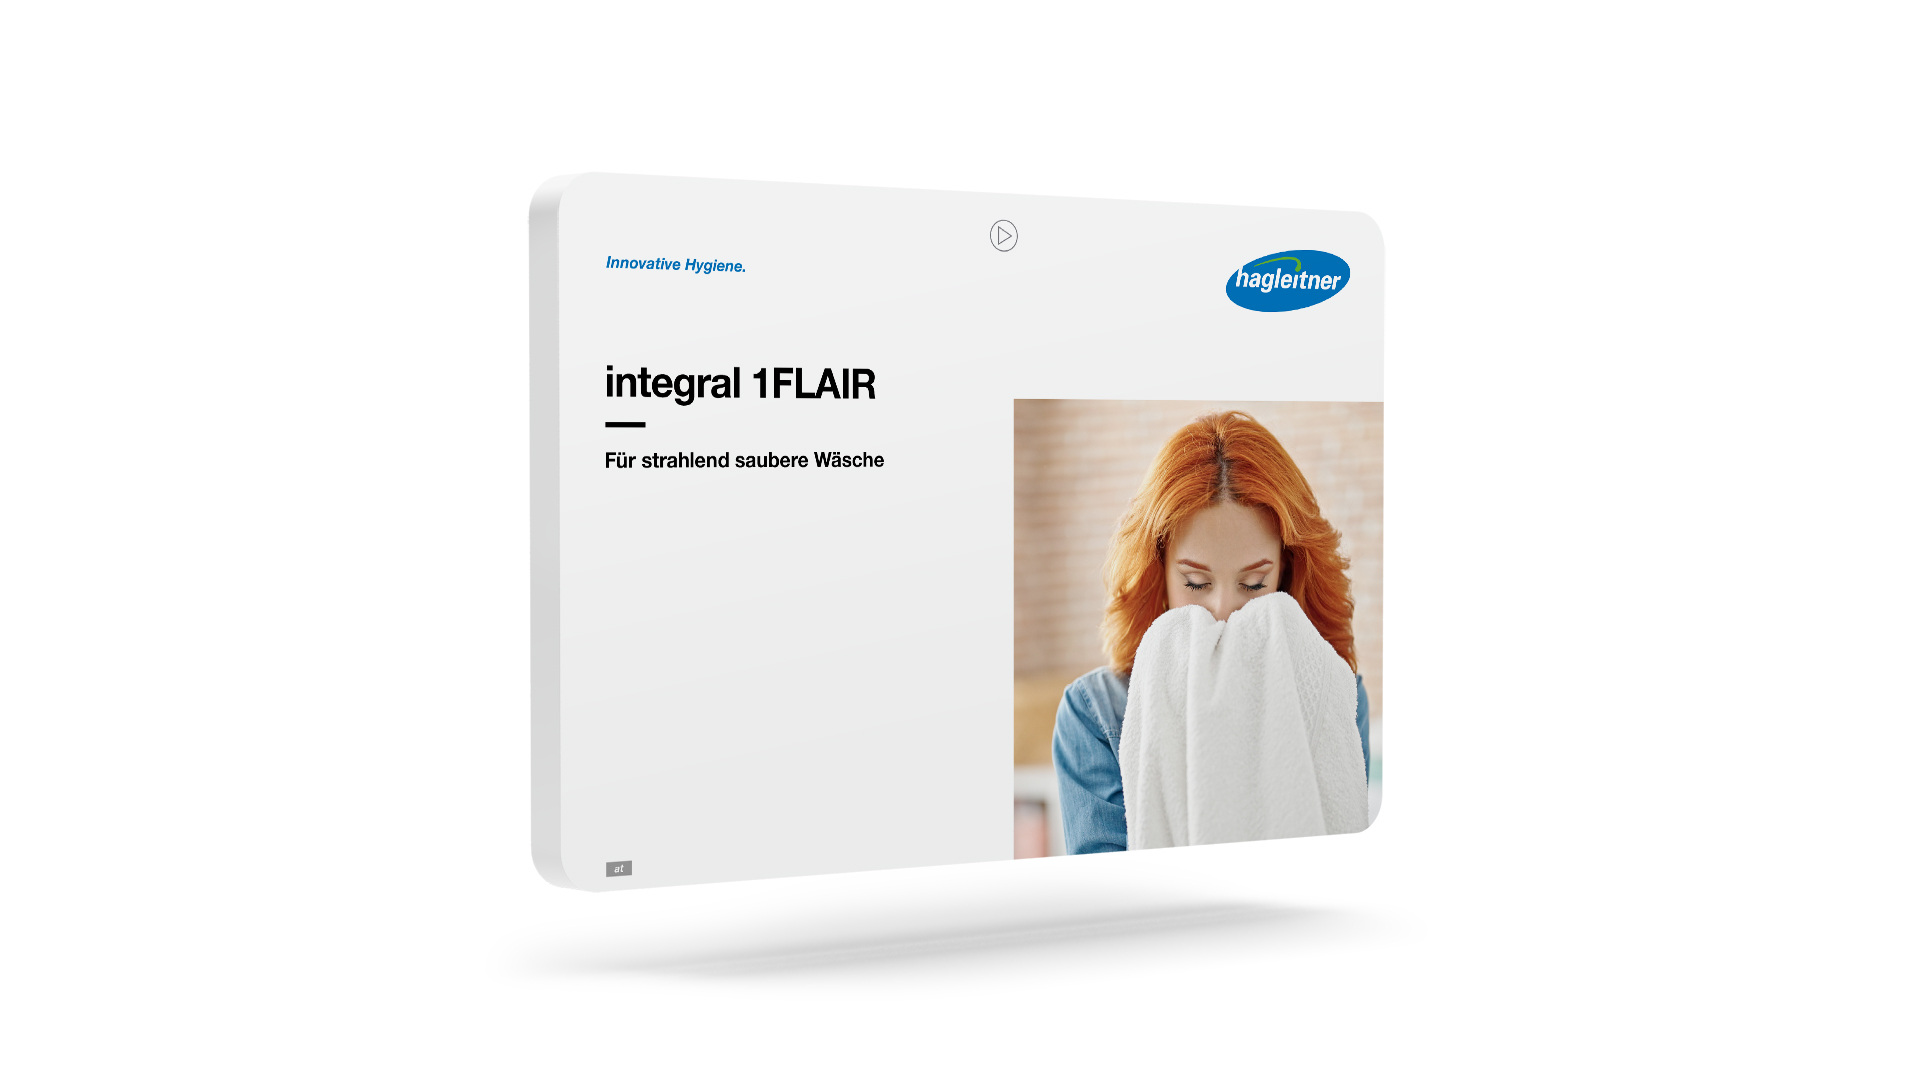 integral-1FLAIR-Digitale-Broschüre-at